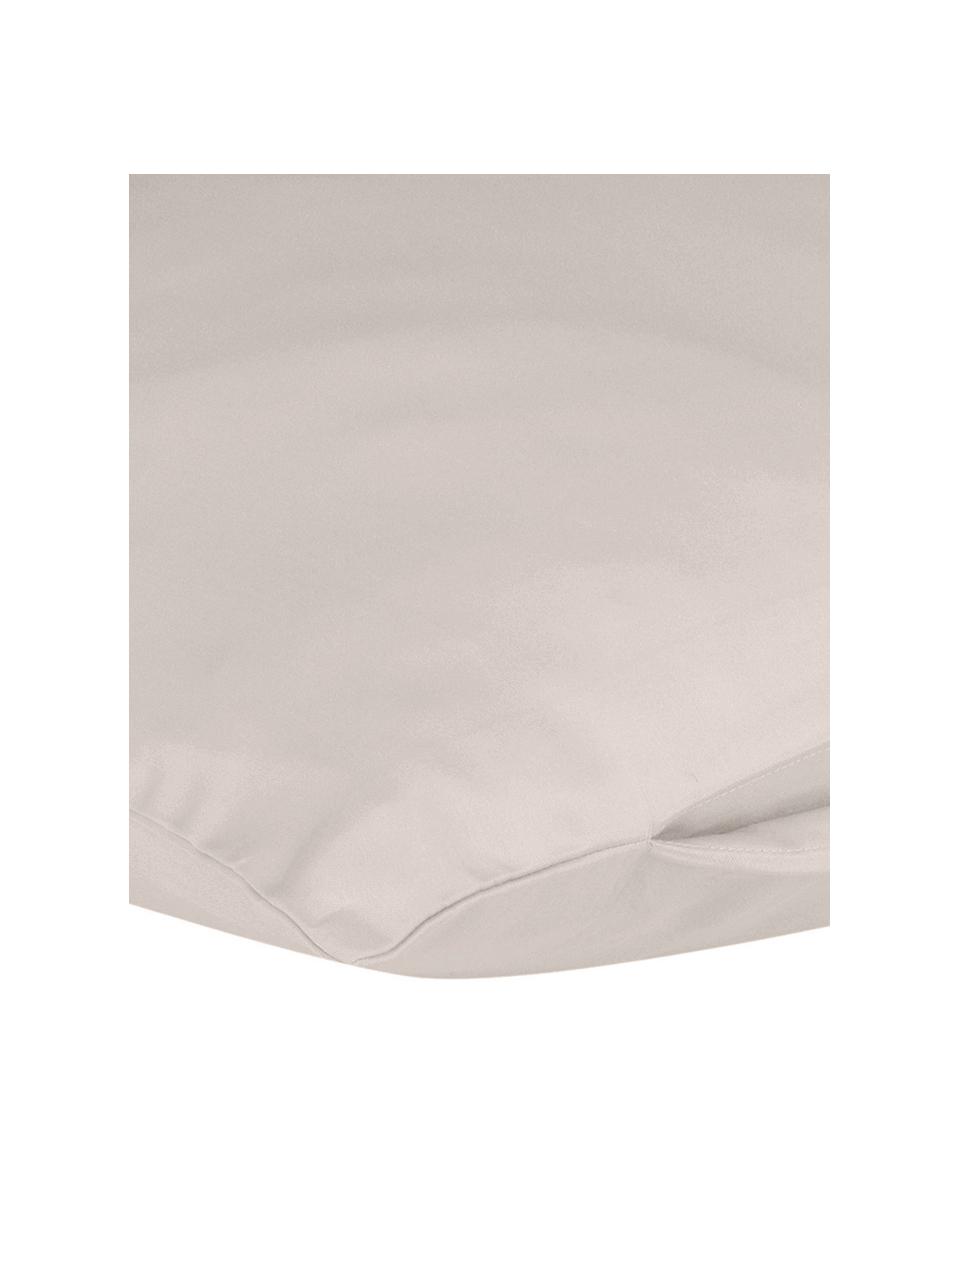 Funda de almohada de satén Comfort, Gris pardo, An 50 x L 70 cm